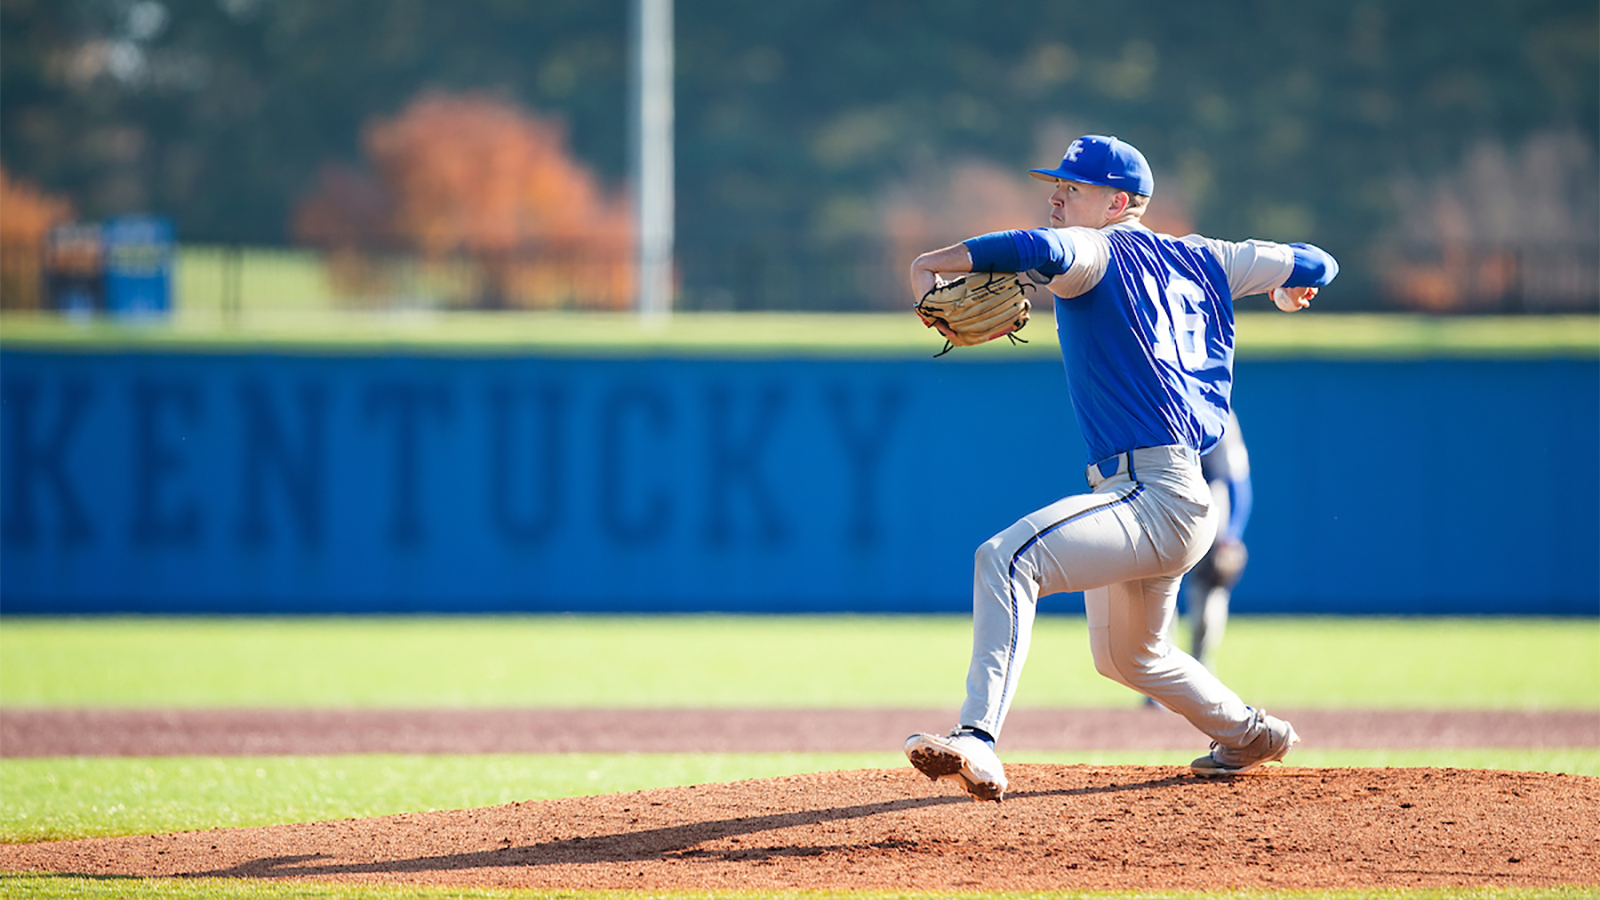 Play Ball: Kentucky Baseball Opens 2021 Season on Tuesday